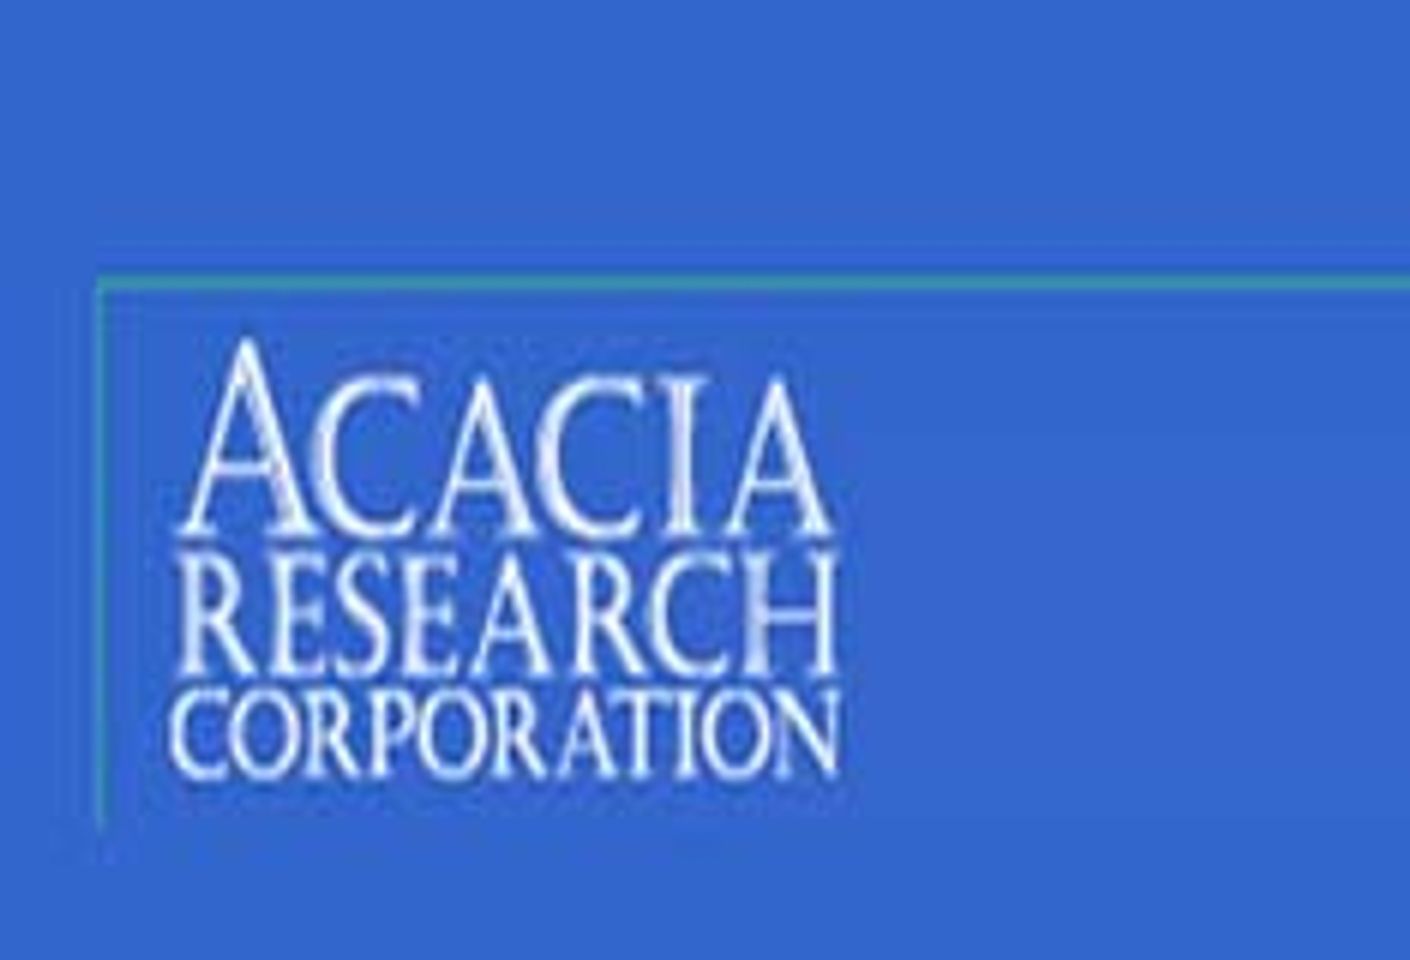 David Lace Sites Closed Over Acacia Patent Claim